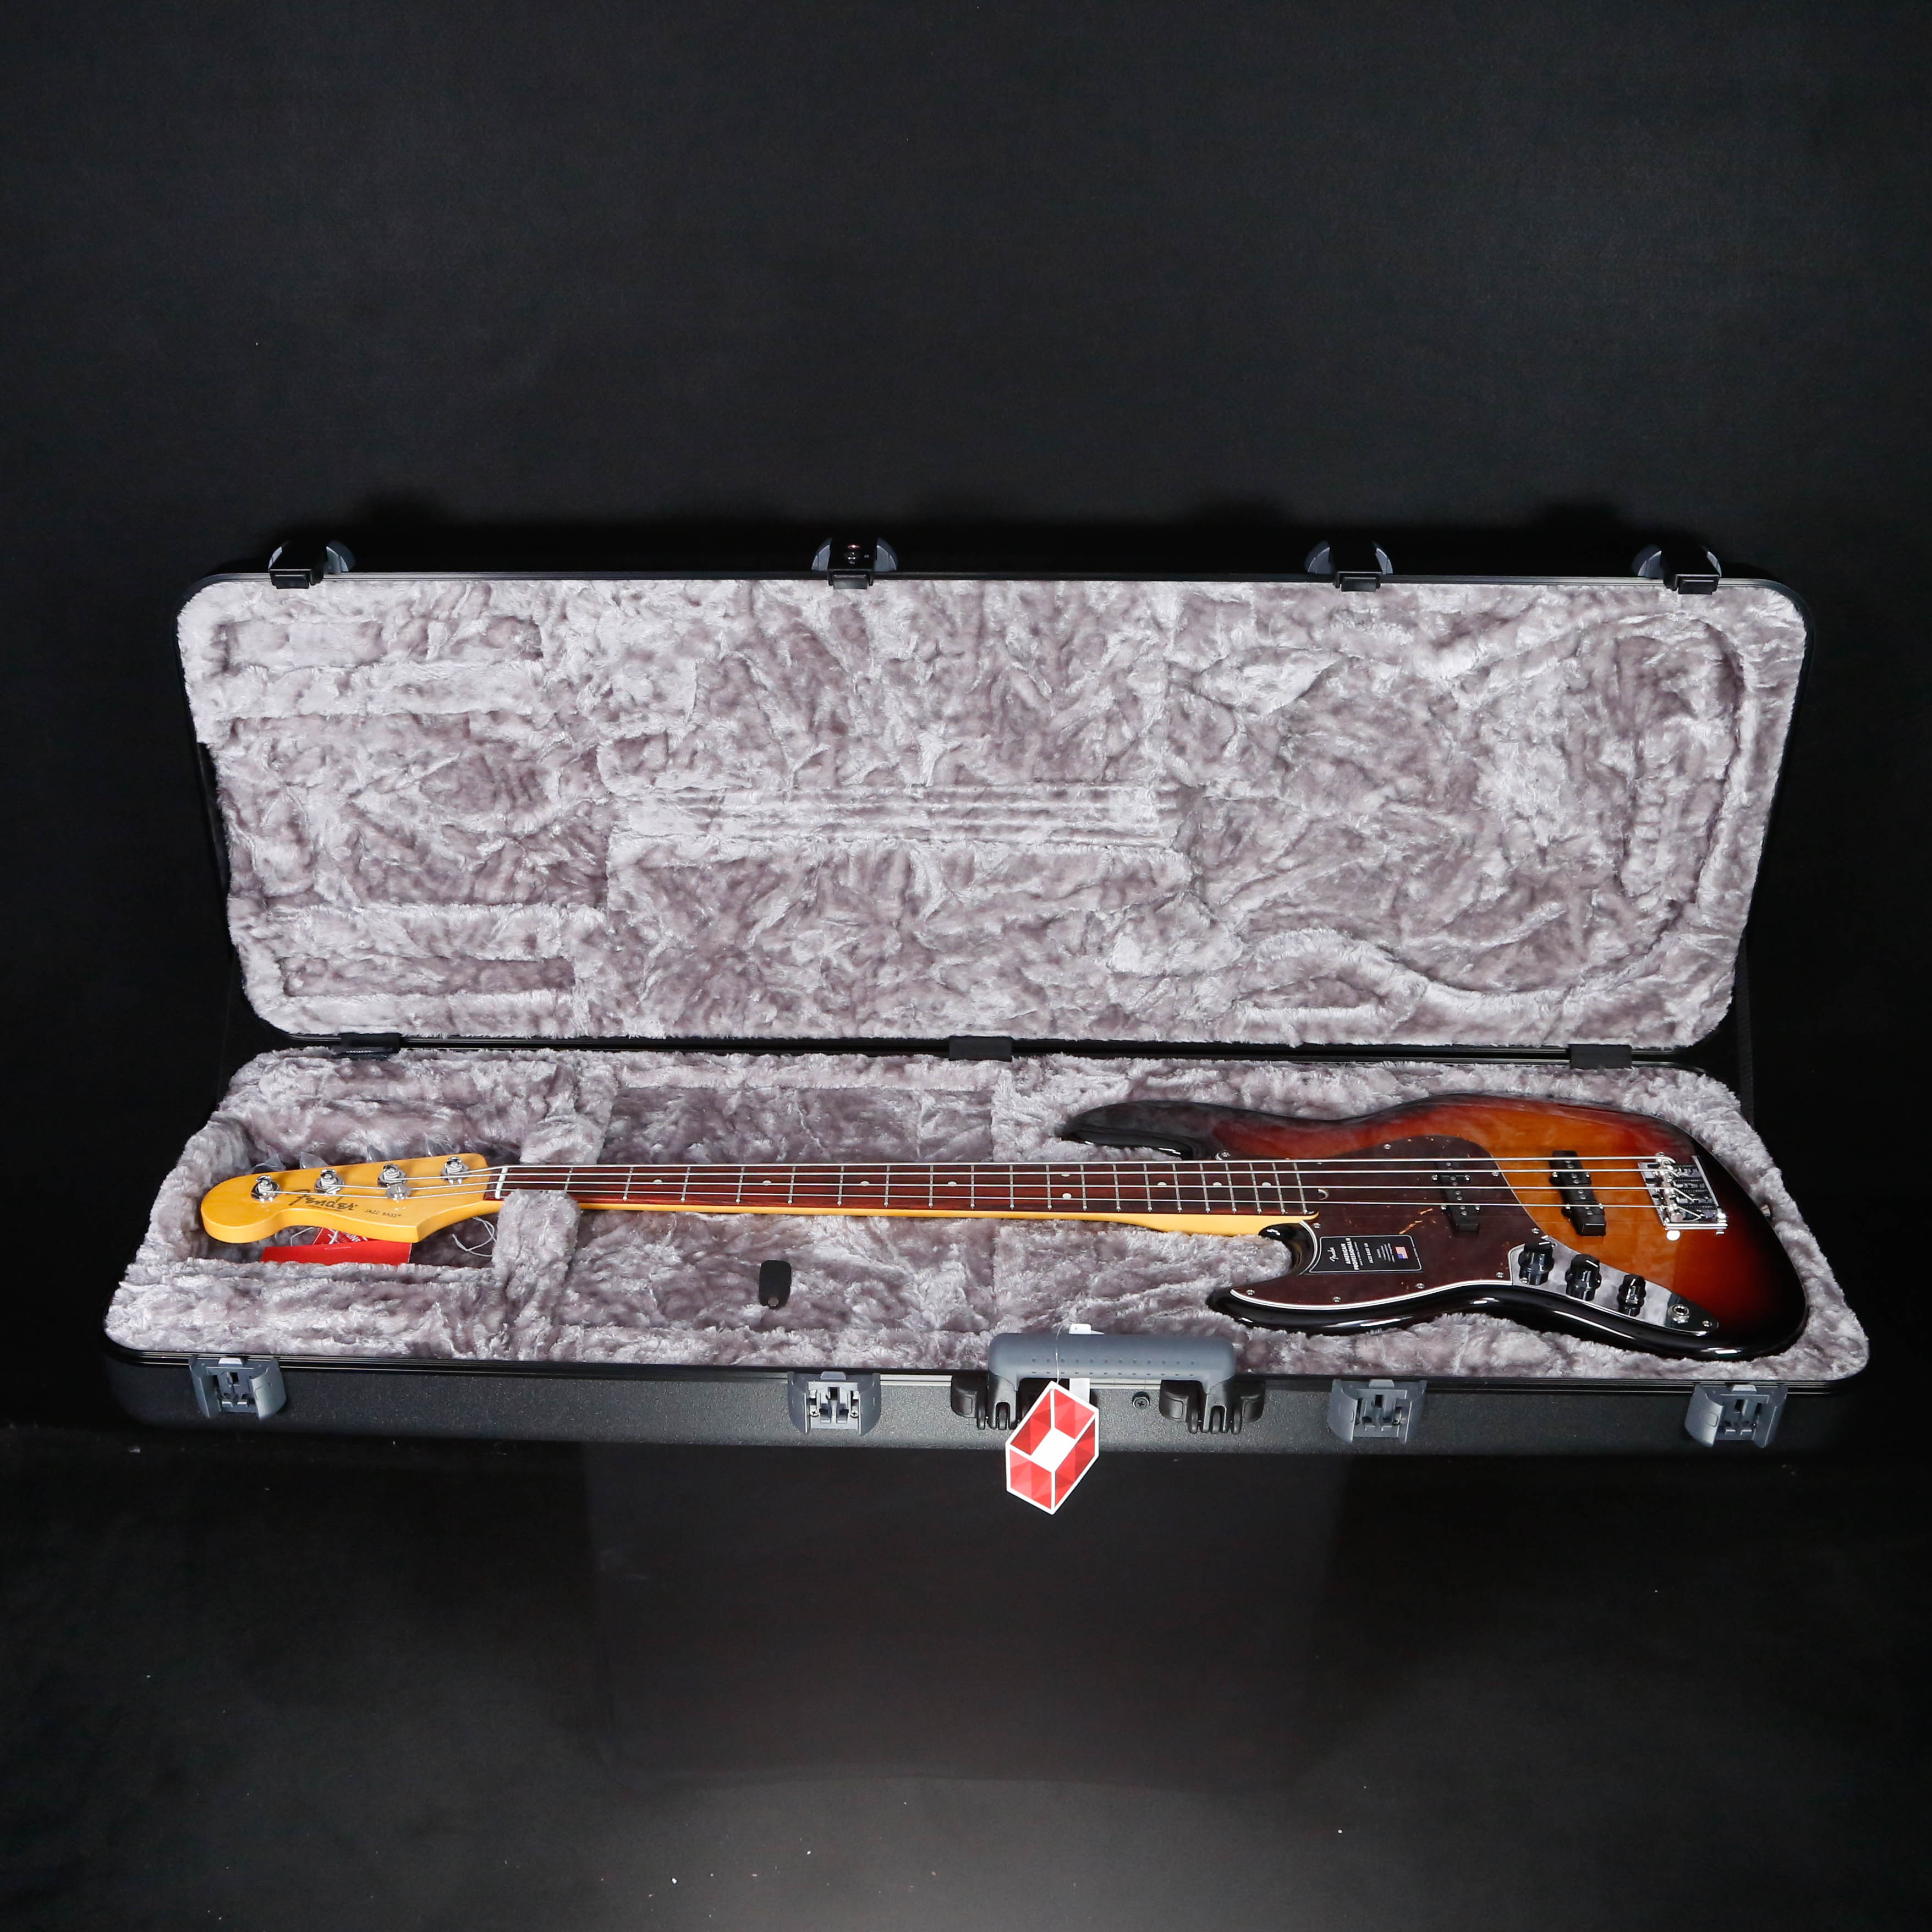 Fender American Professional II Jazz Bass Left-Hand, Sunburst